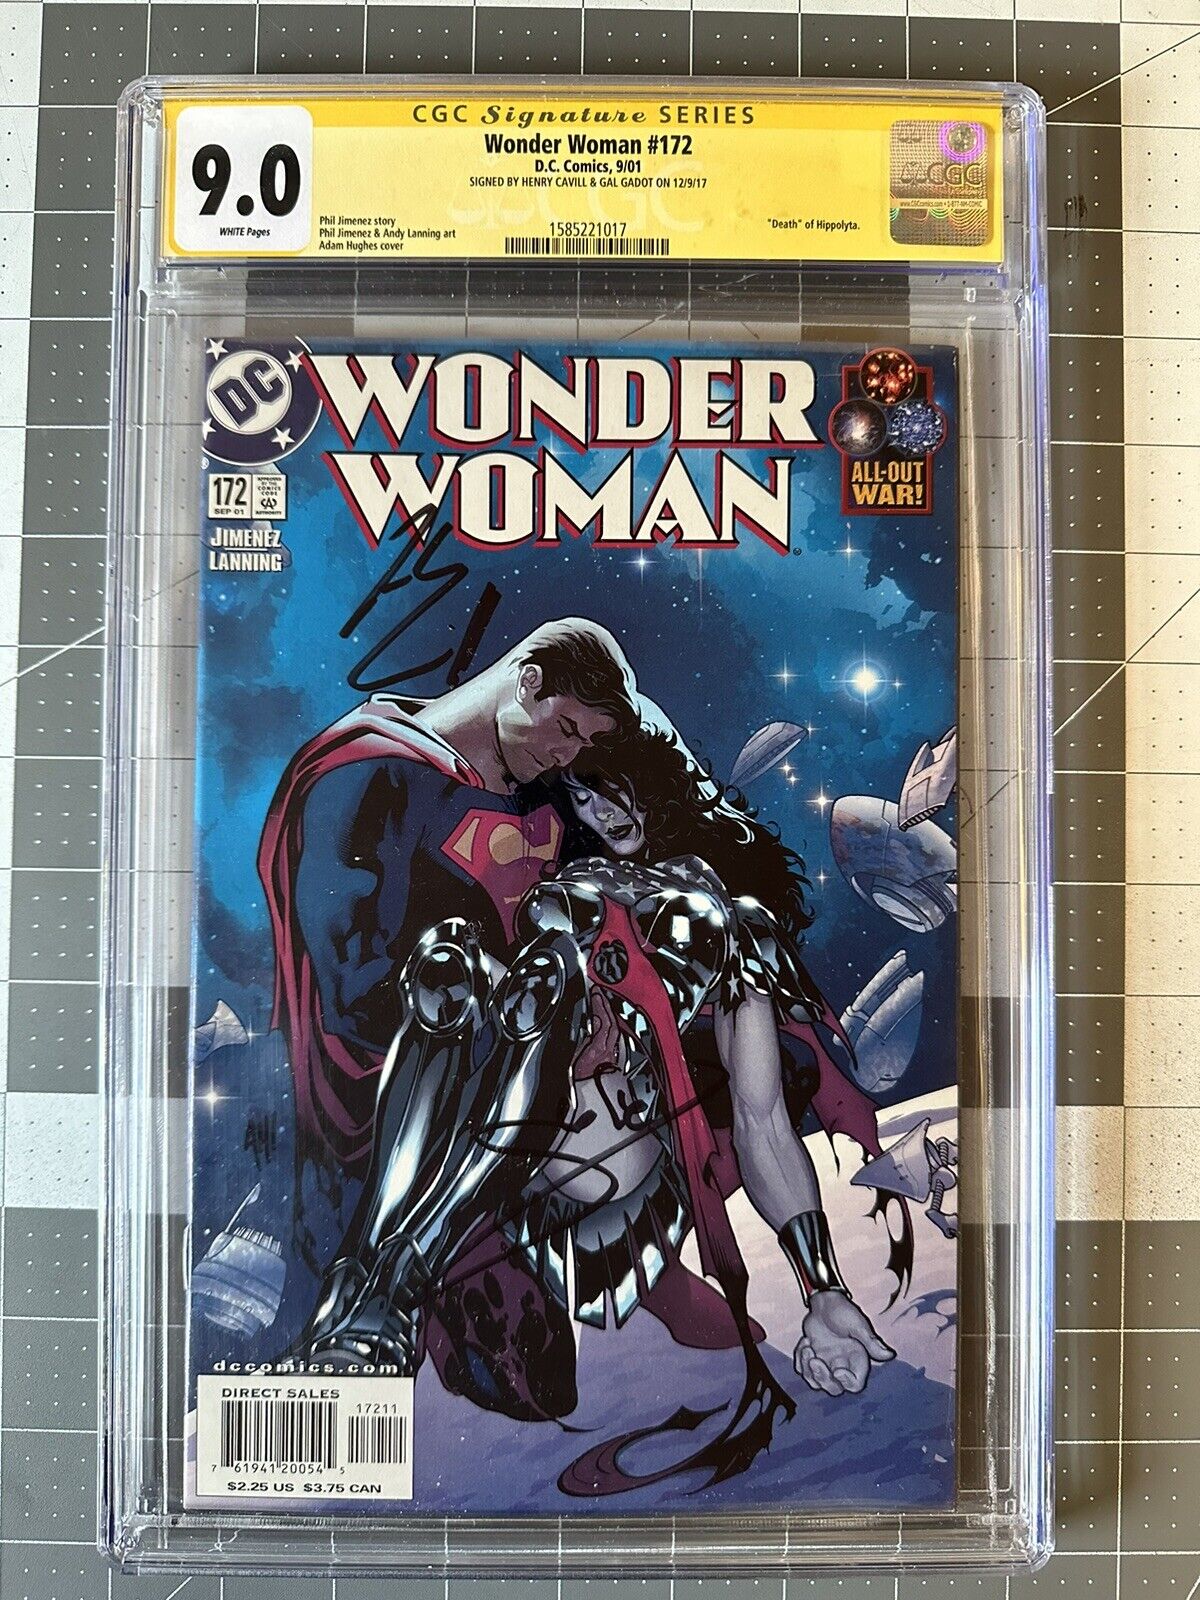 Wonder Woman #172 Hughes cover Superman CGC 9.0 Signature Cavill Gadot DC KEY